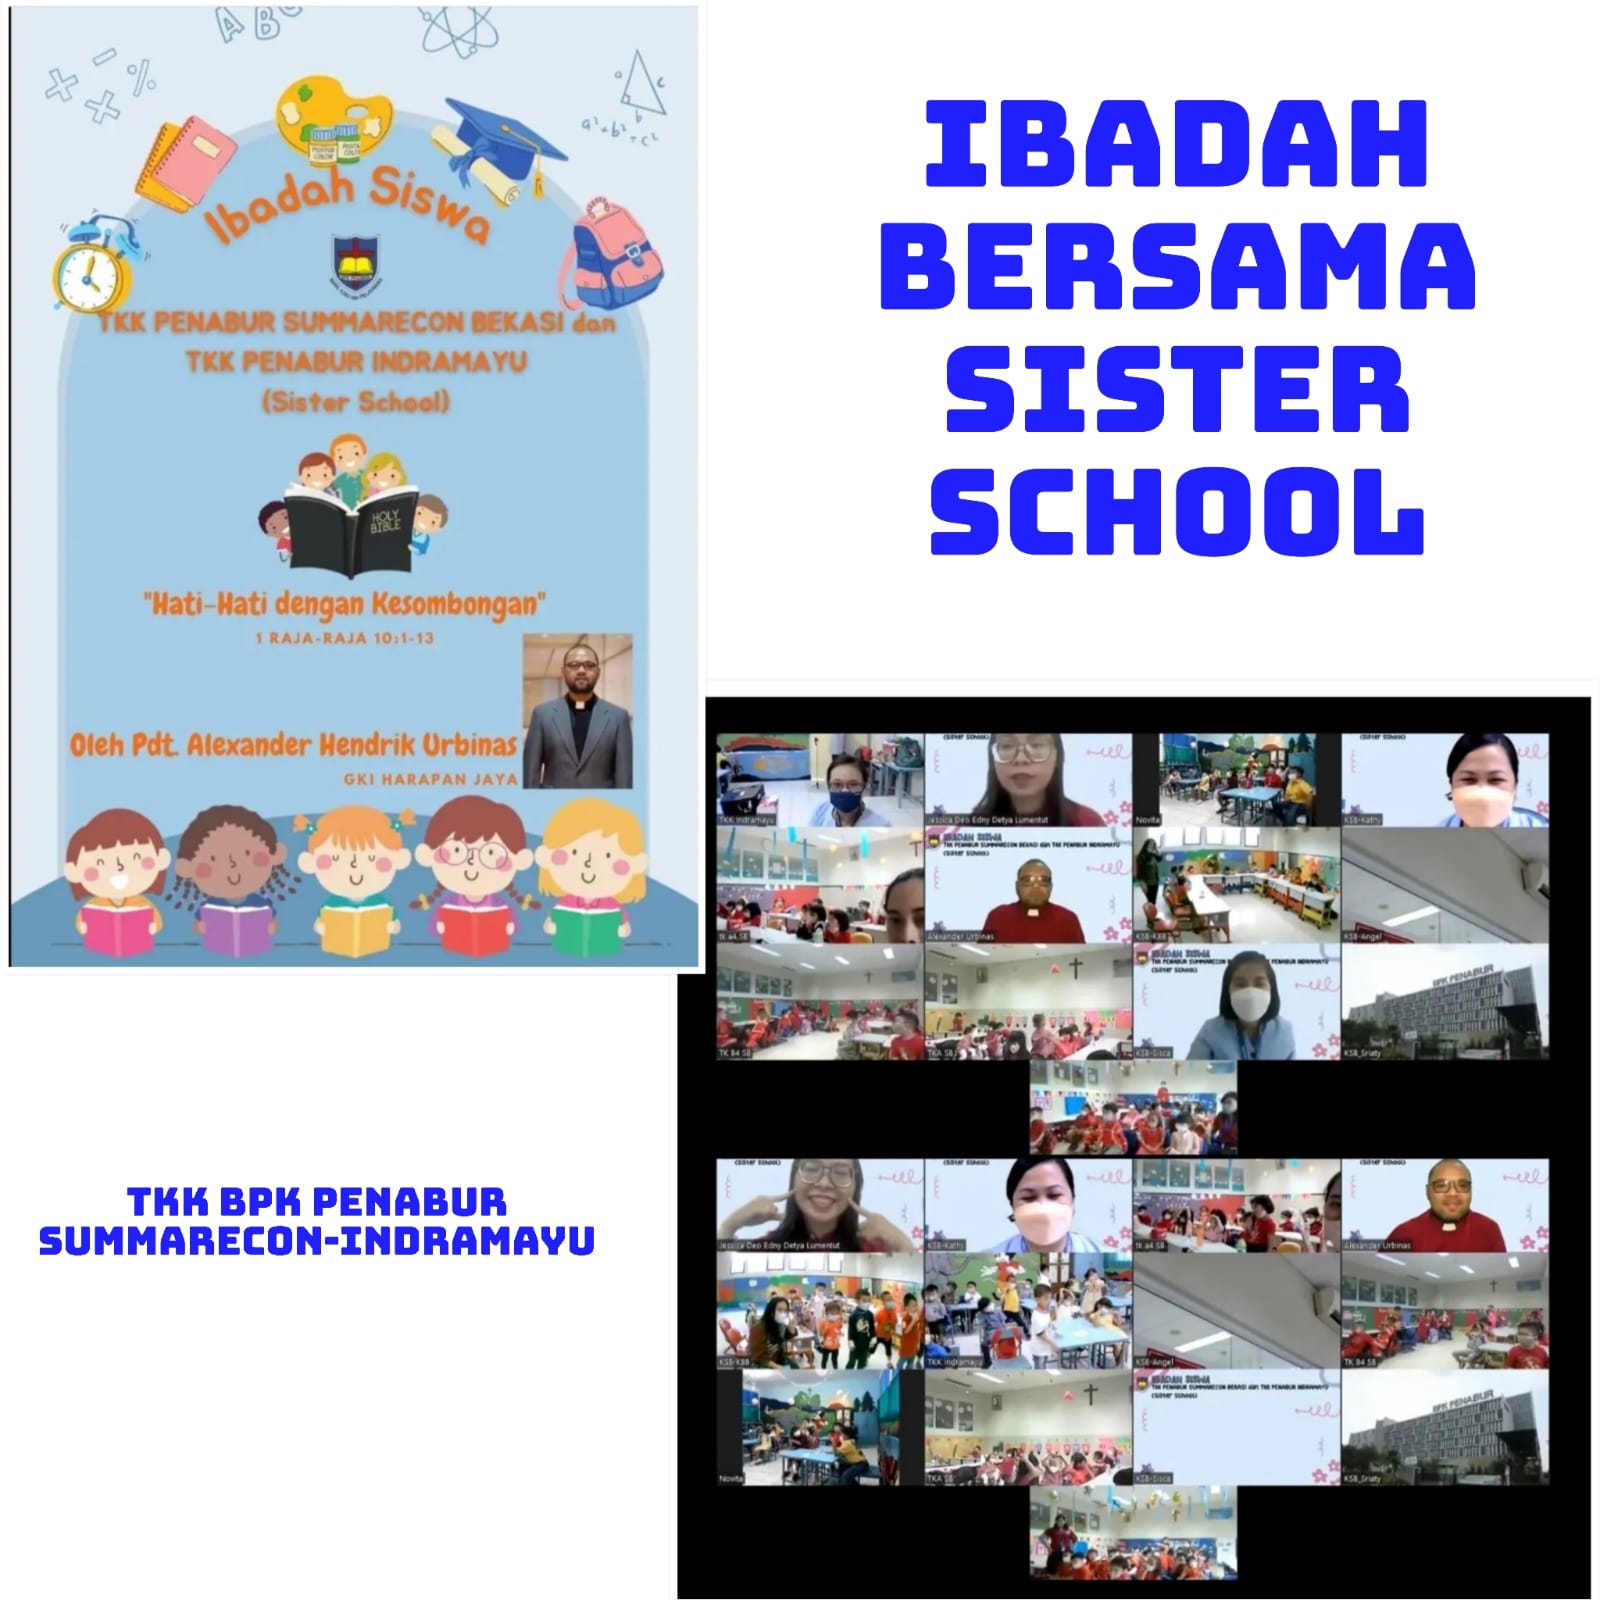 Ibadah Bersama Sister School